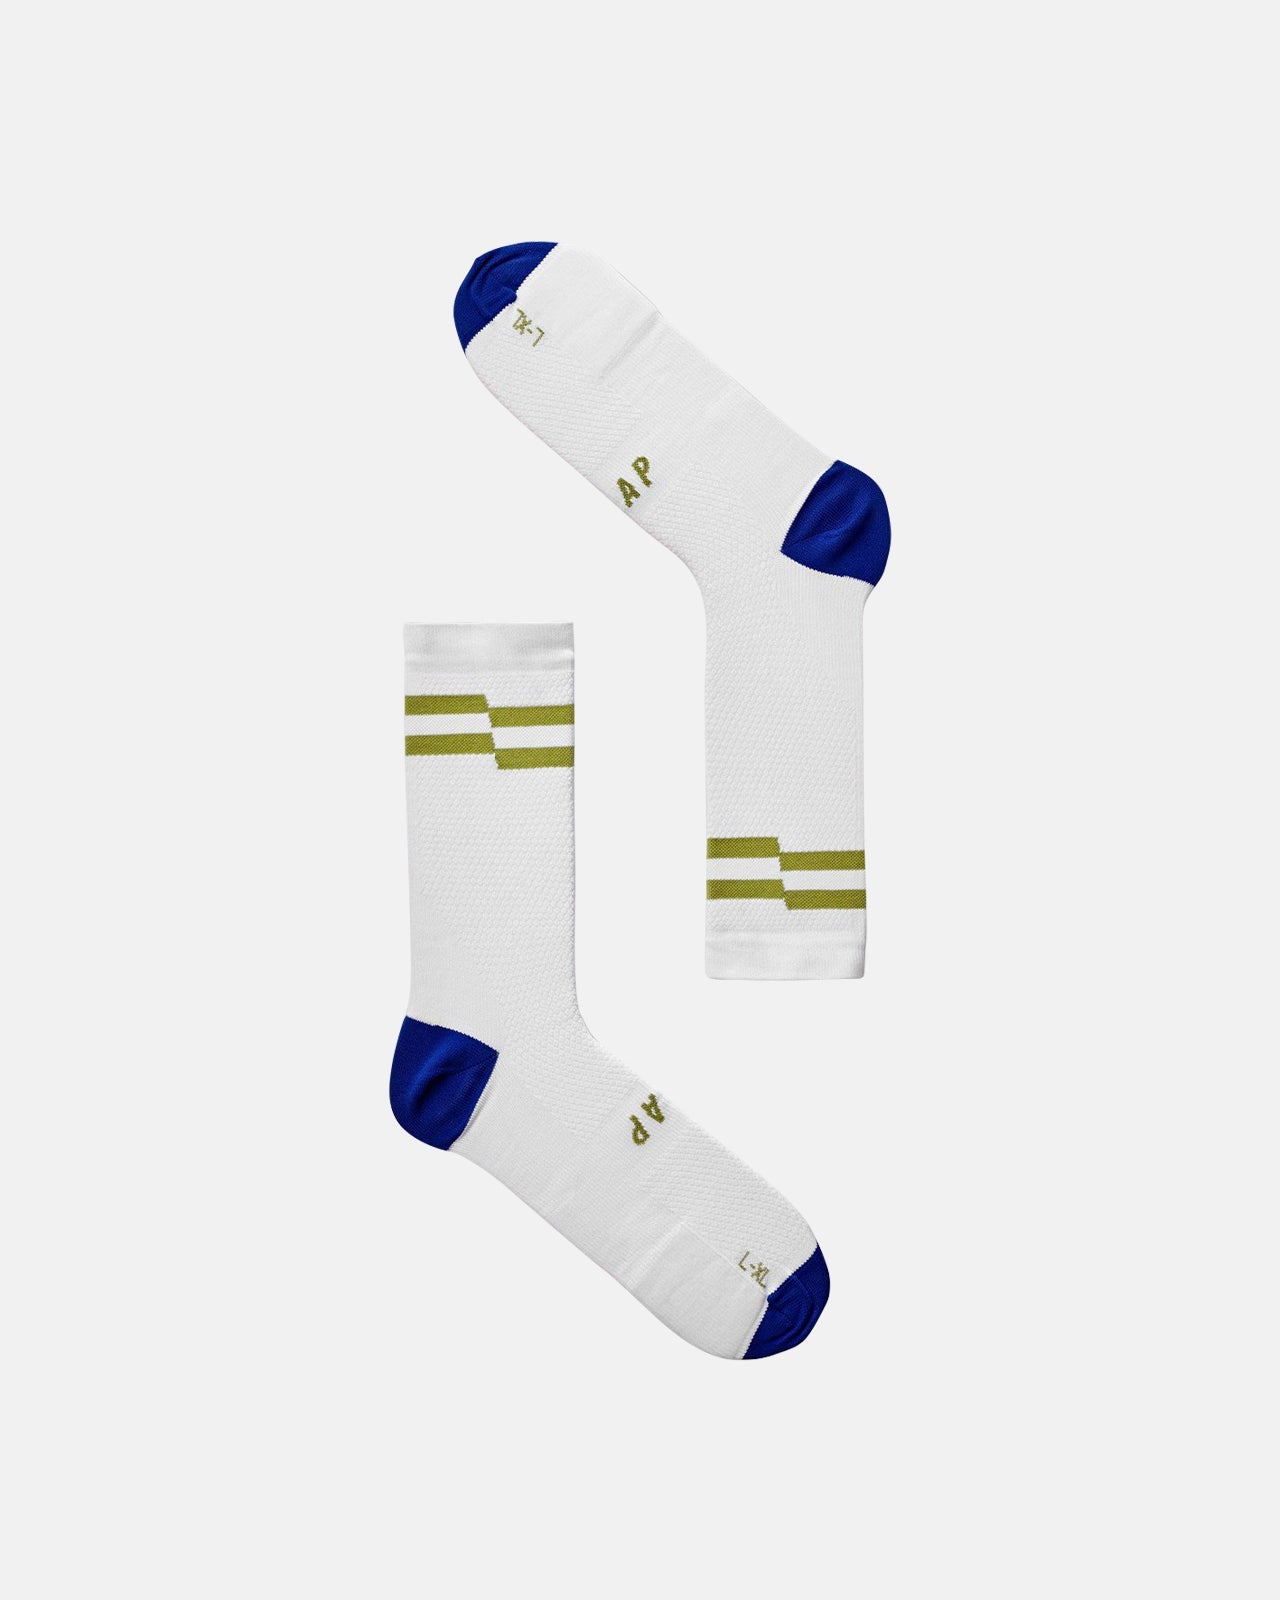 Emblem Sock - MAAP